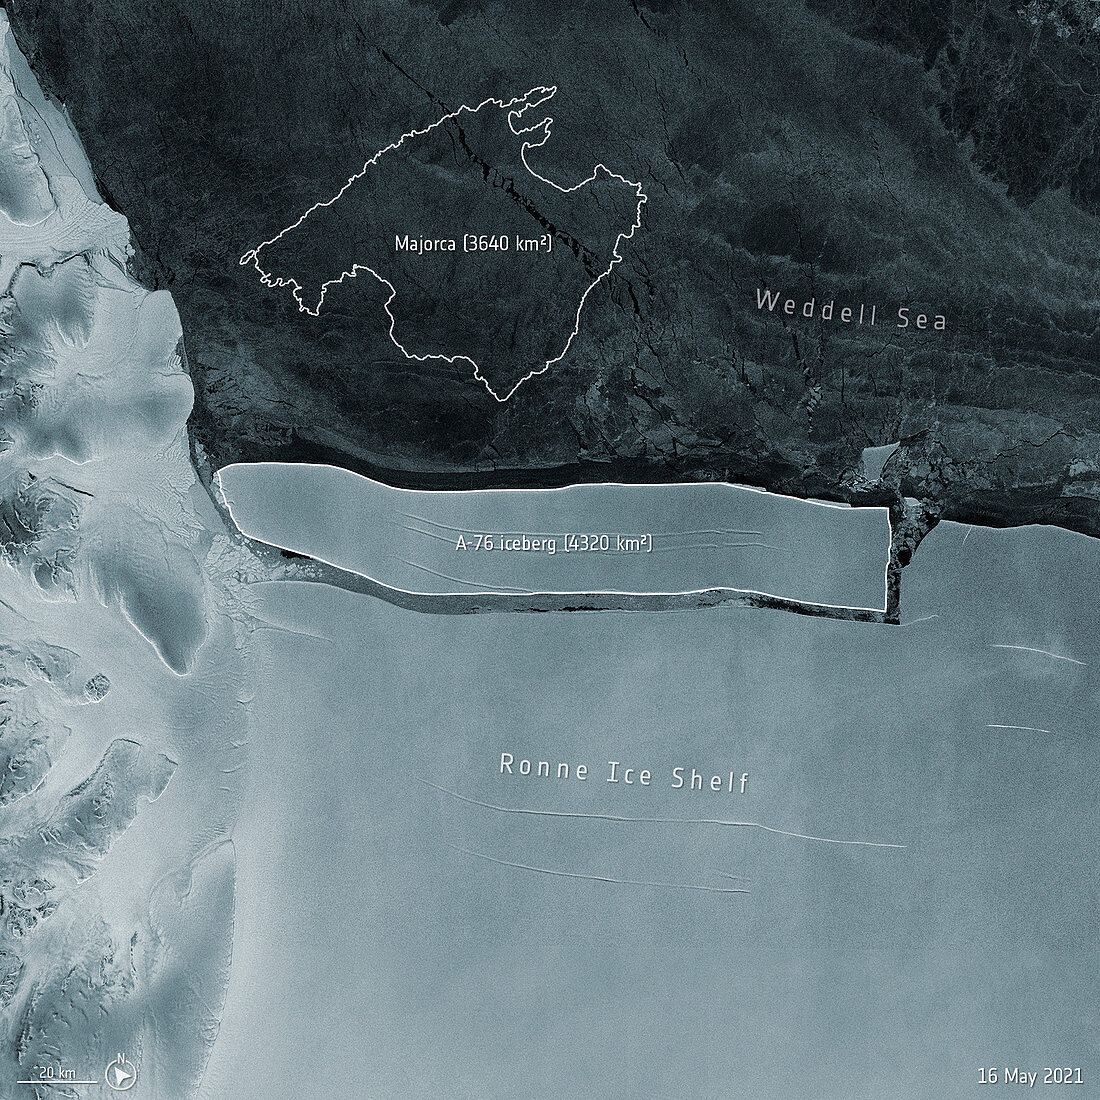 A-76 iceberg calving from Ronne Ice Shelf, satellite image